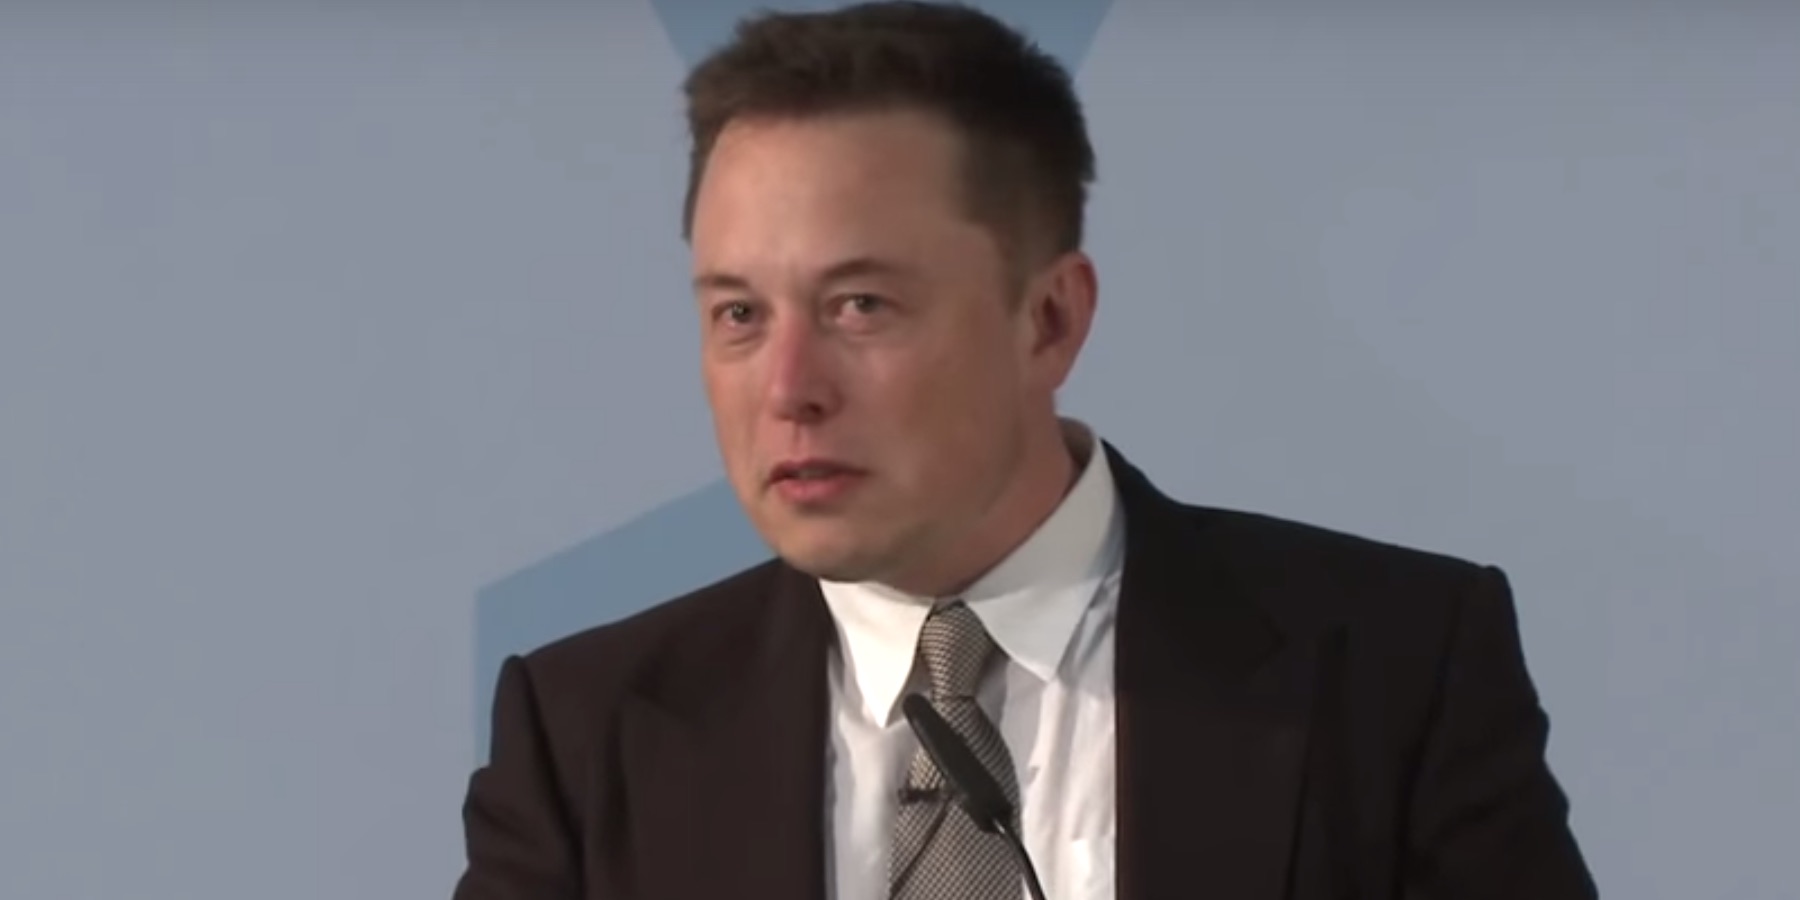 Elon Musk Climate change will exacerbate refugee crises, motivation